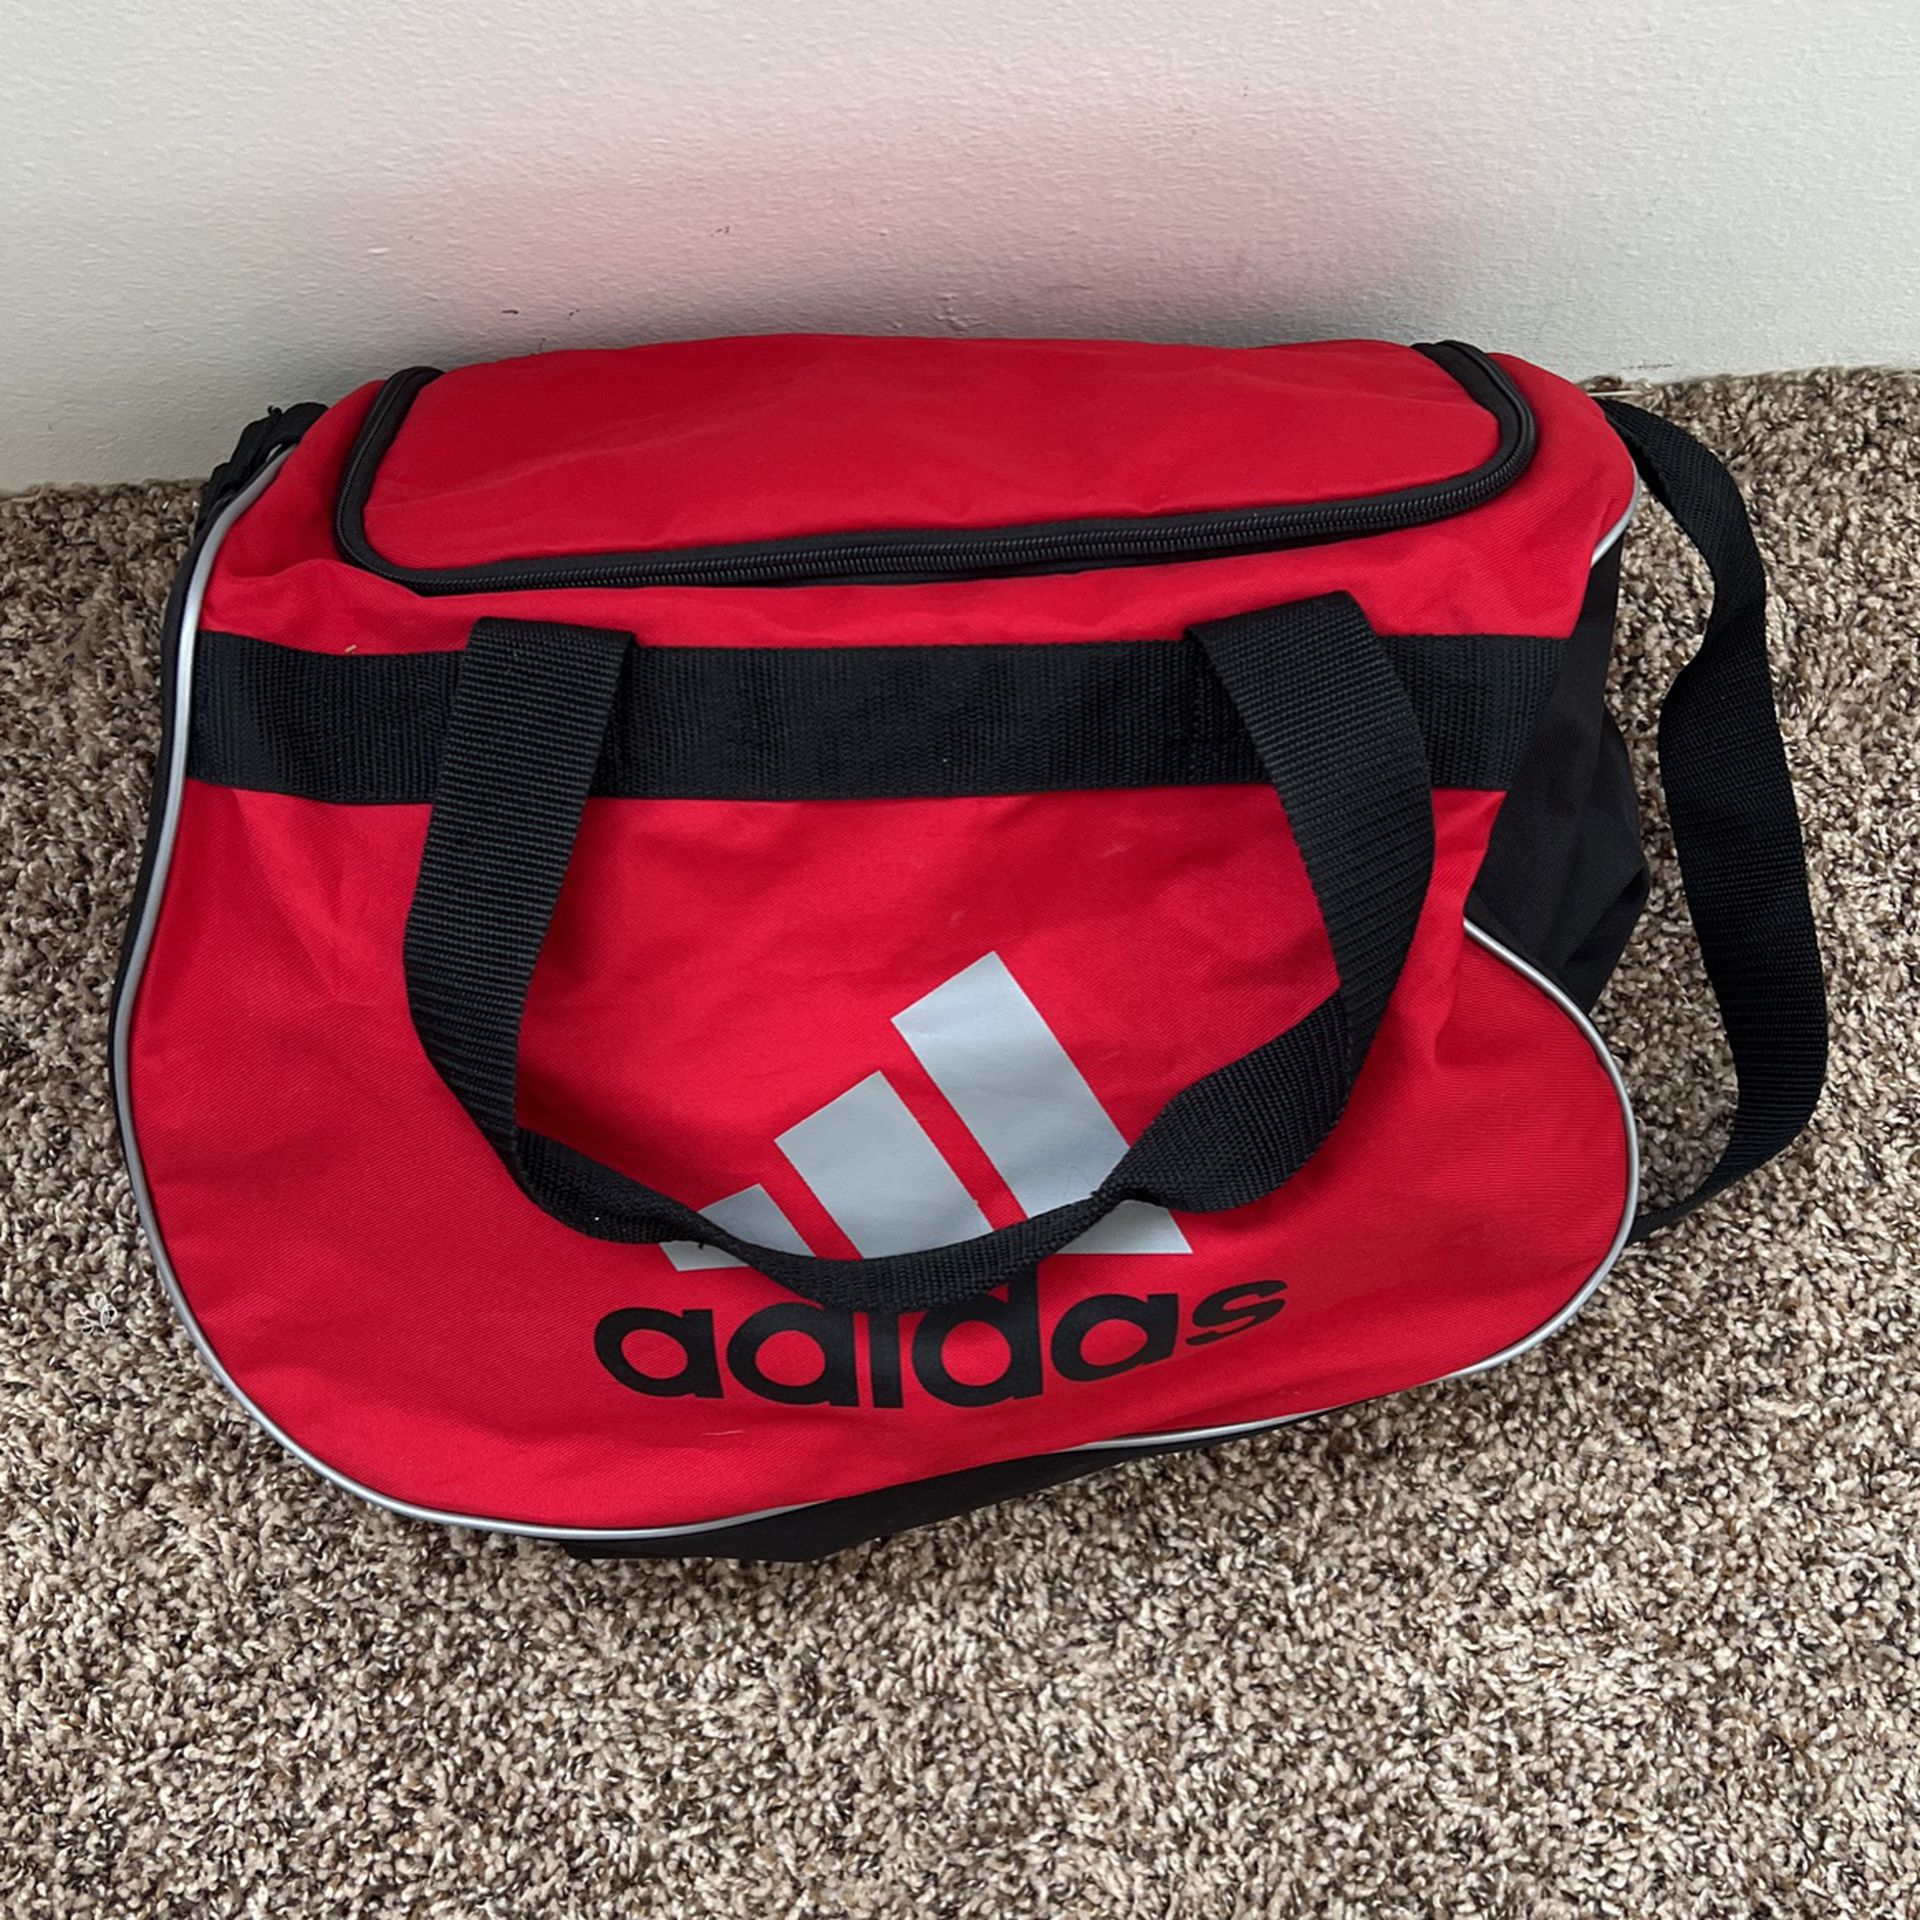 Adidas Red Duffle Bag 